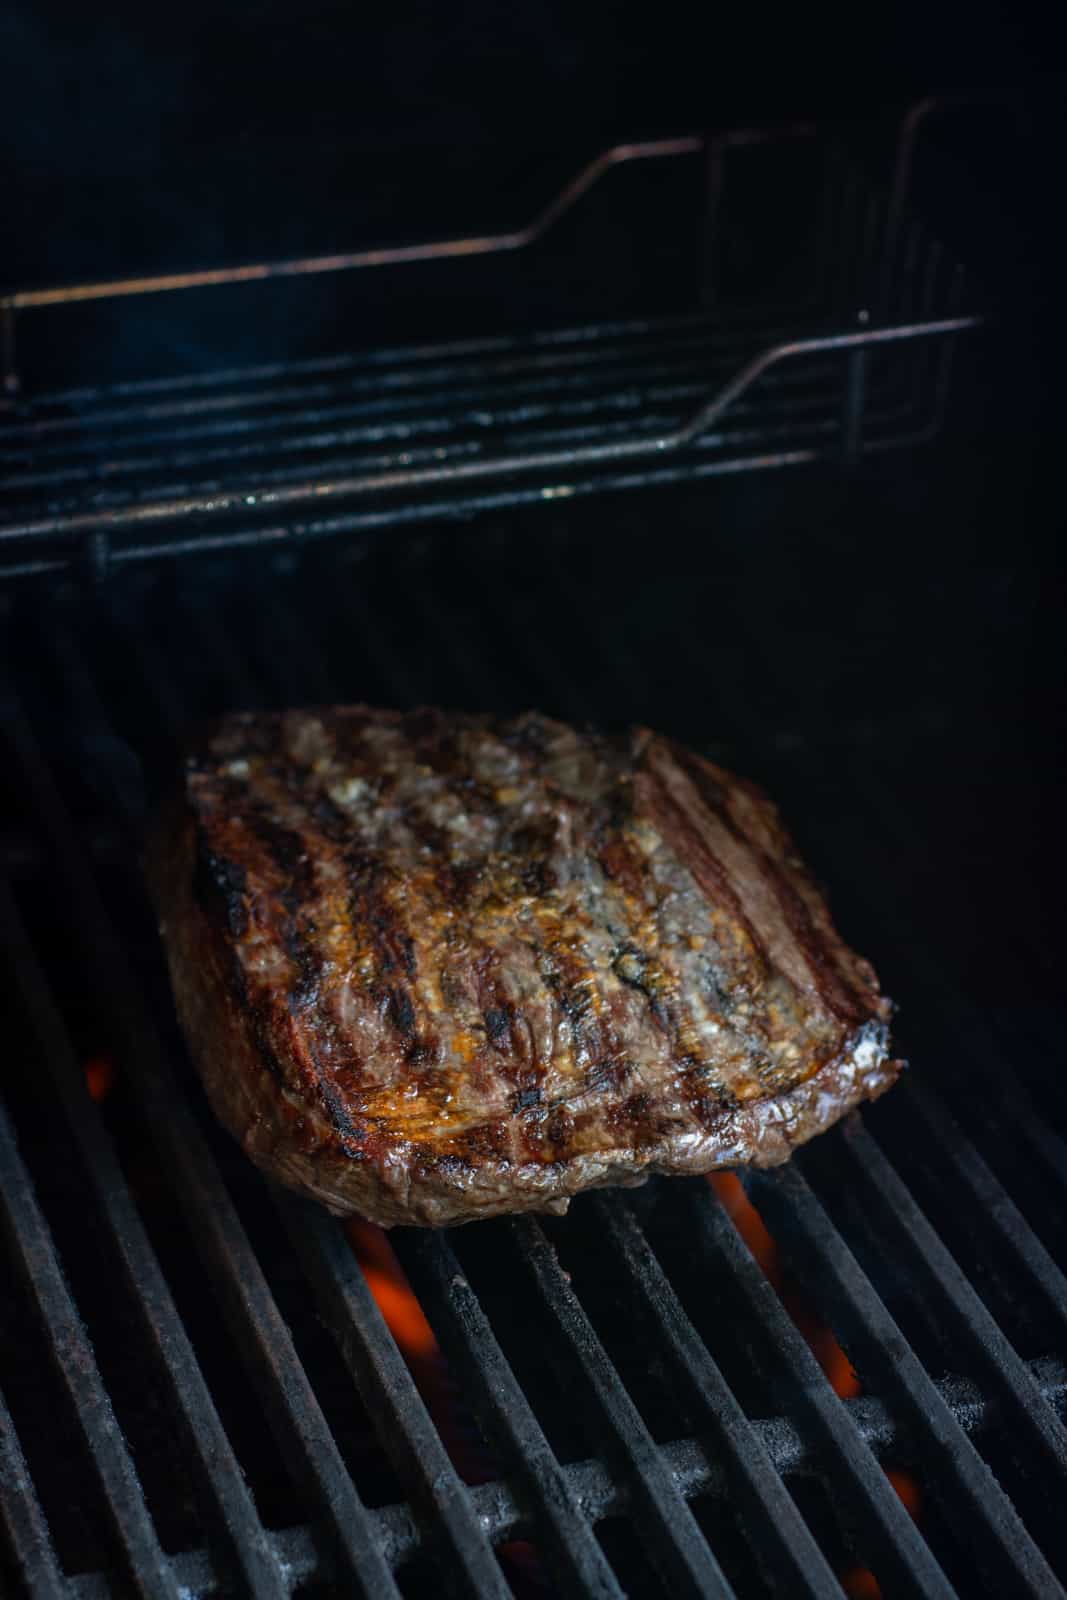 bavette steak grilling on BBQ